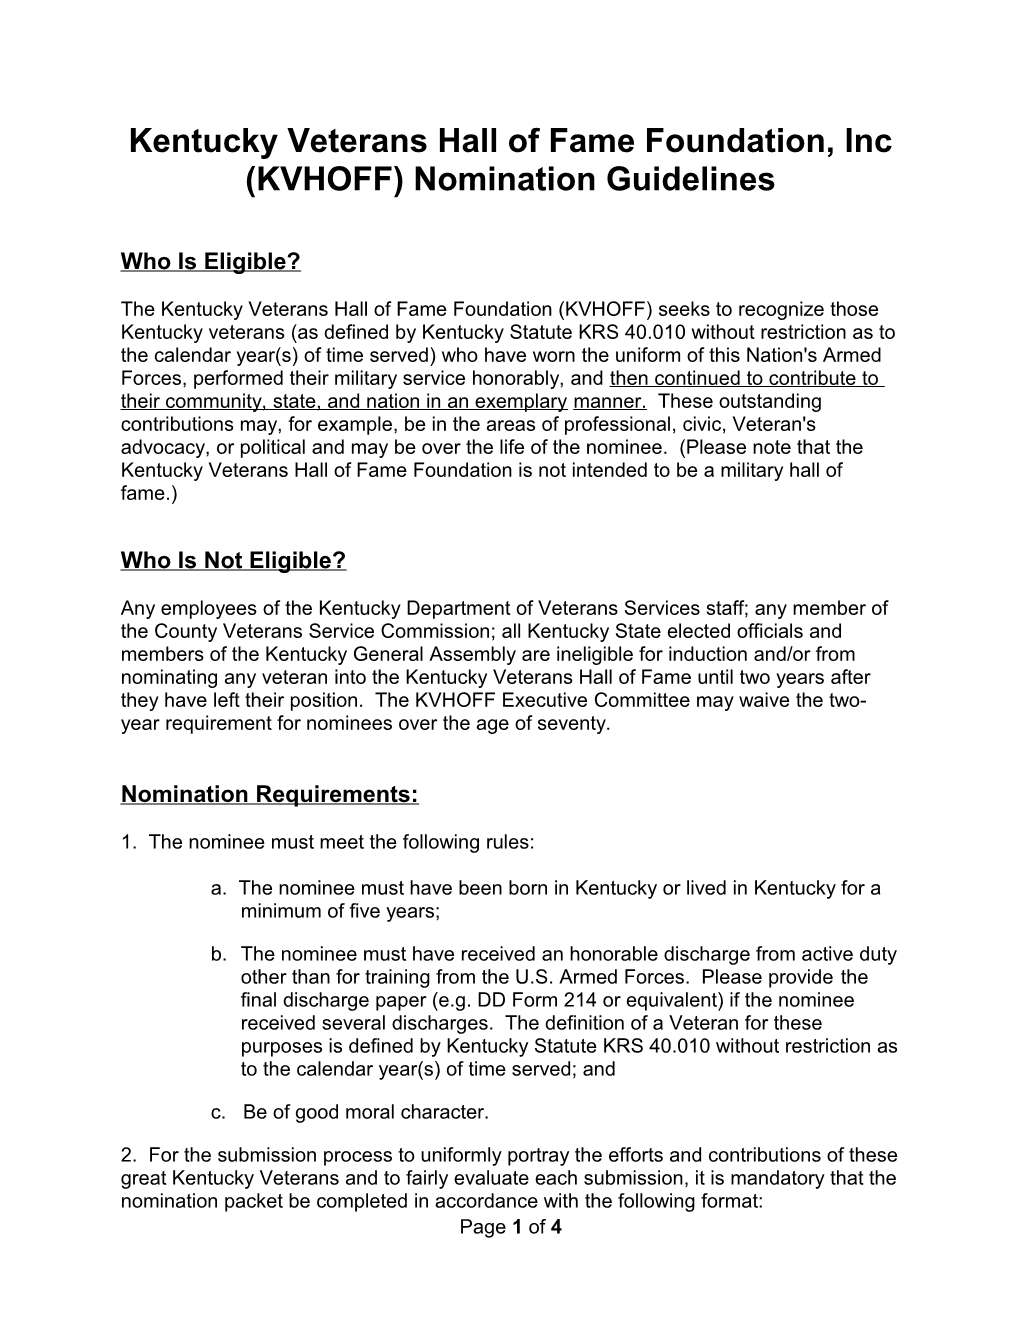 Kentucky Veterans Hall of Fame Foundation, Inc (KVHOFF) Nomination Guidelines